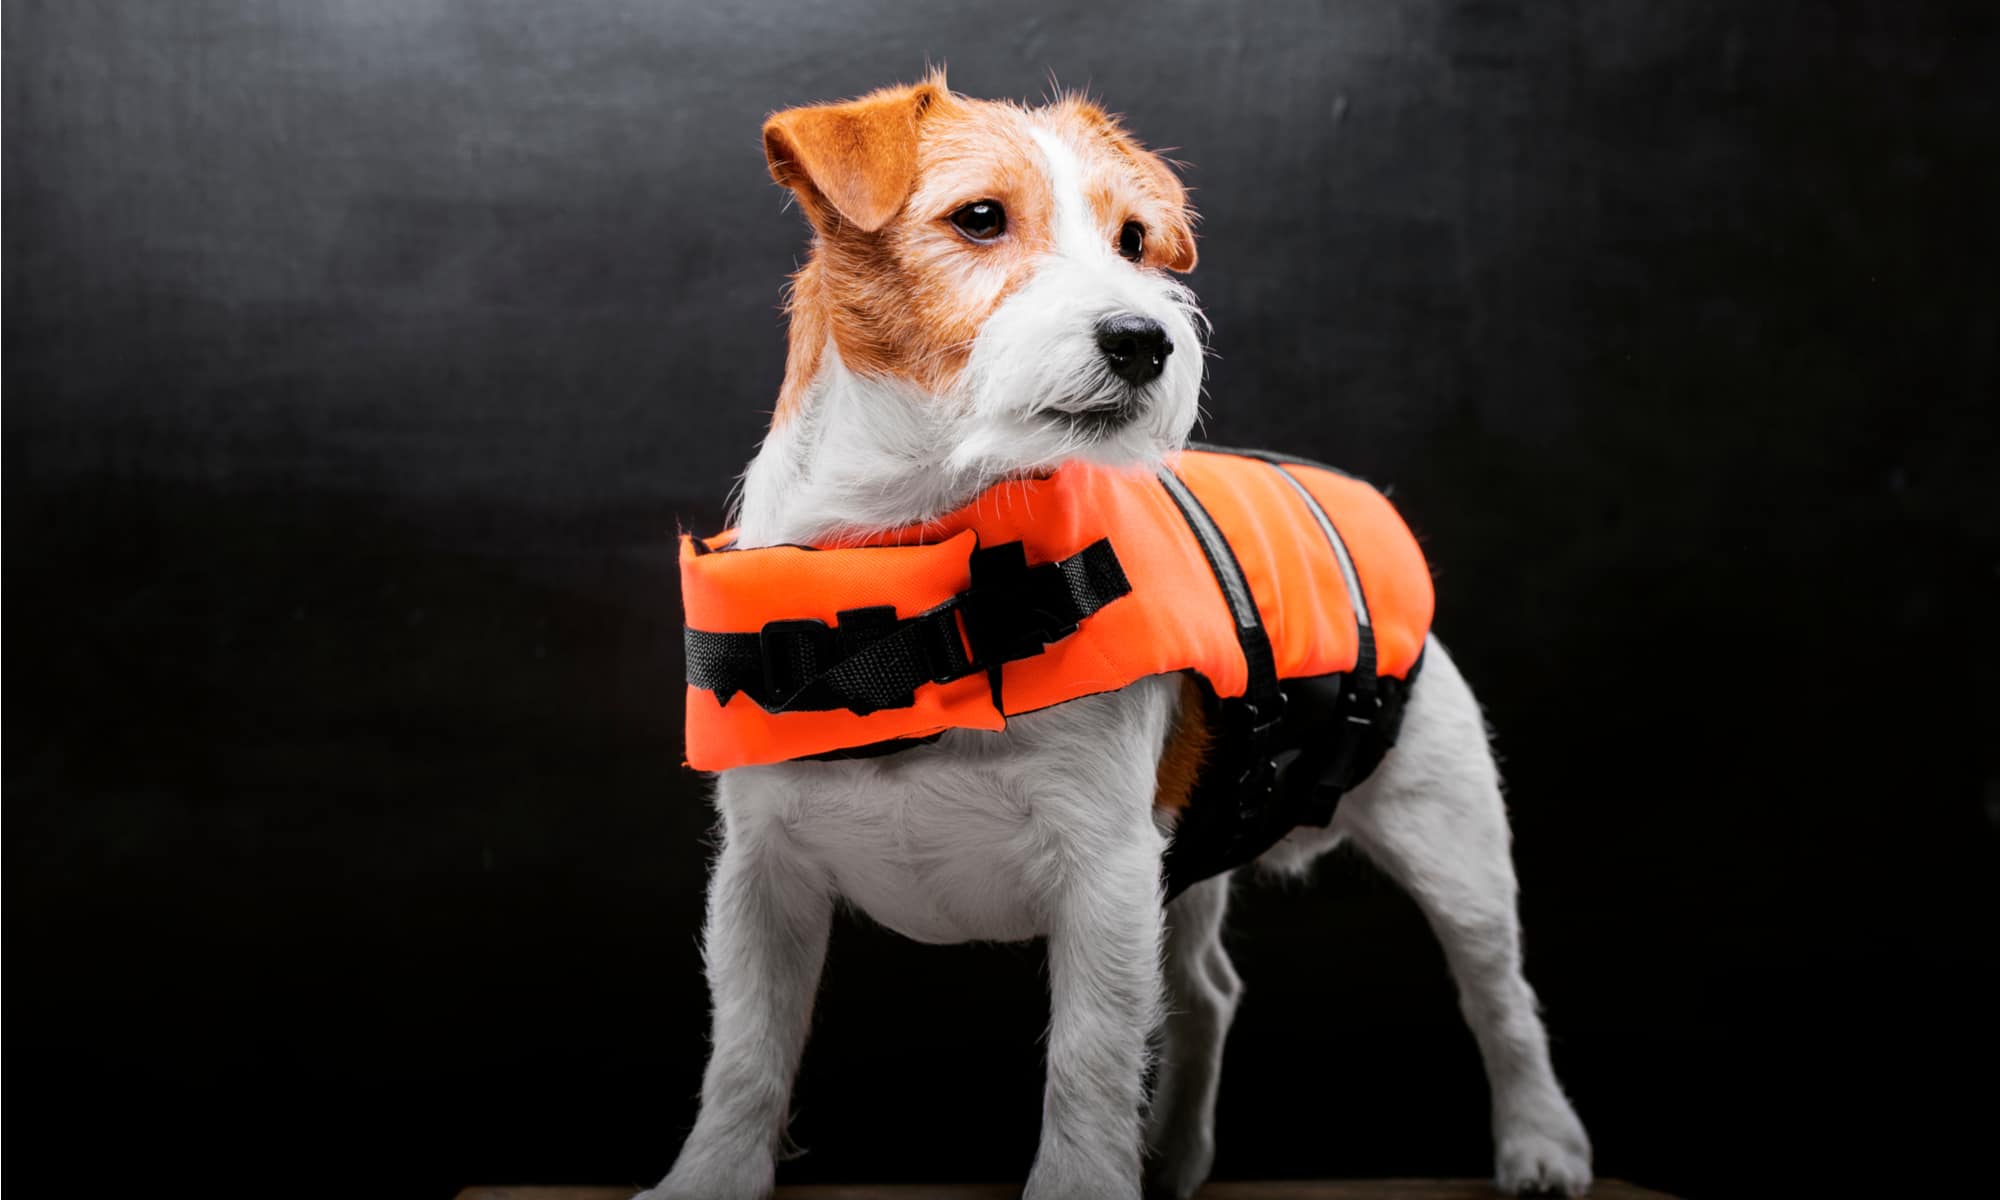 KAMA BRIDAL Dog Life Jacket Ripstop Pet Life Vest Adjustable Camouflage Dog Flotation Lifesaver with Reflective Stripes Powerful Buoyancy for Small Medium and Large Dogs 